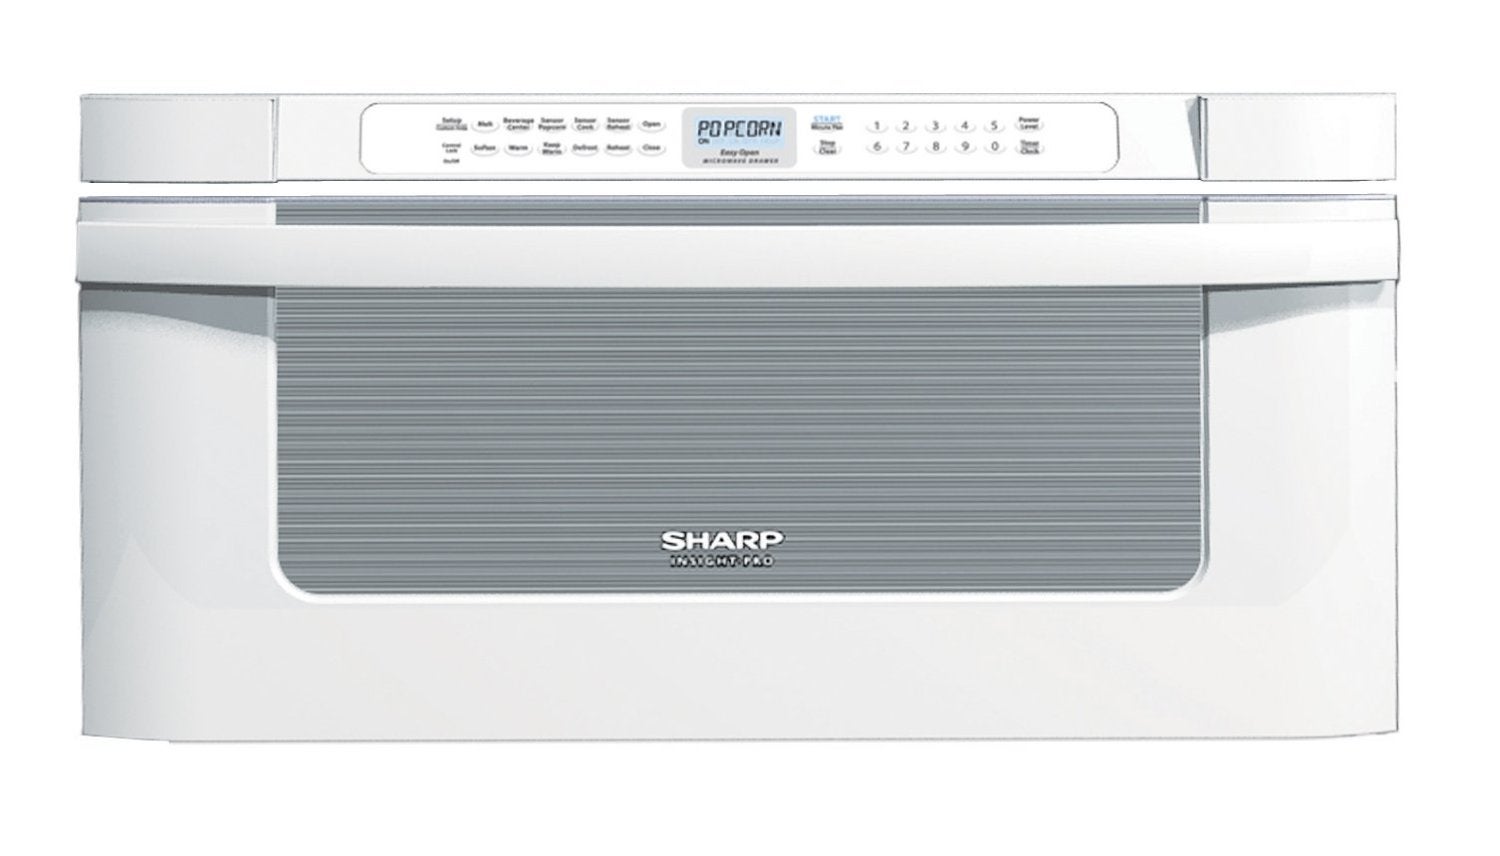 Sharp KB6525PW